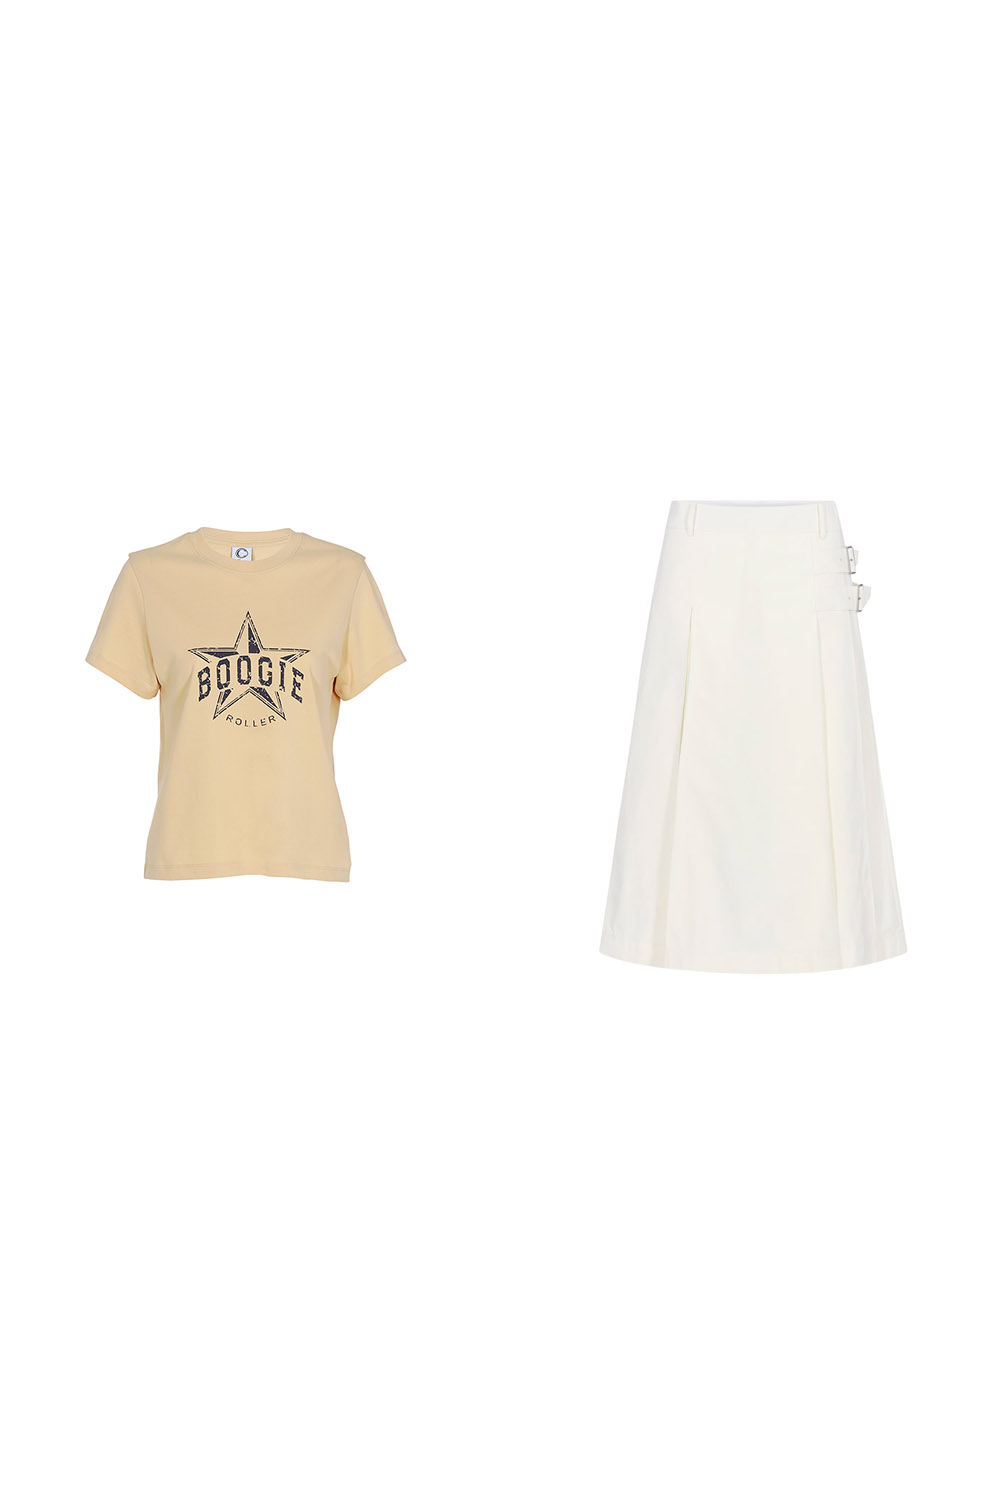 Boogie T-shirts_beige+Sounds Paris Skirt_white